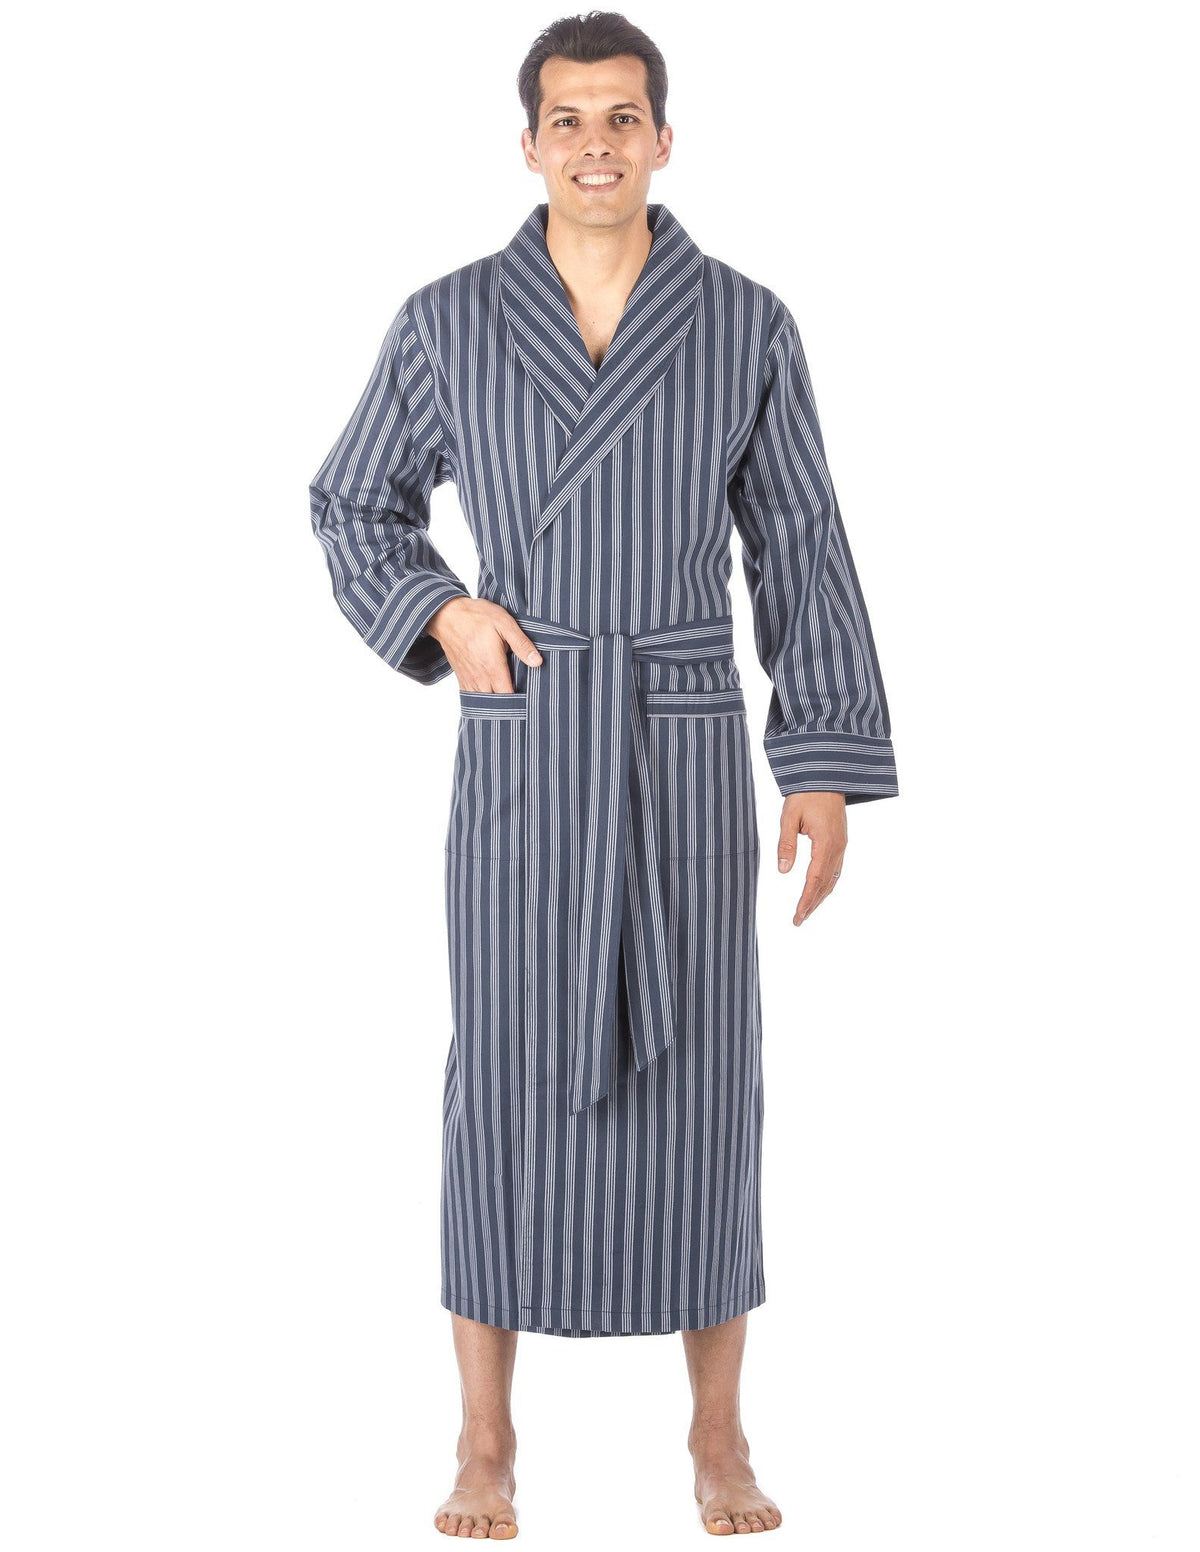 Men's Premium 100% Cotton Full-Length Robe - Stripes Blue Tone